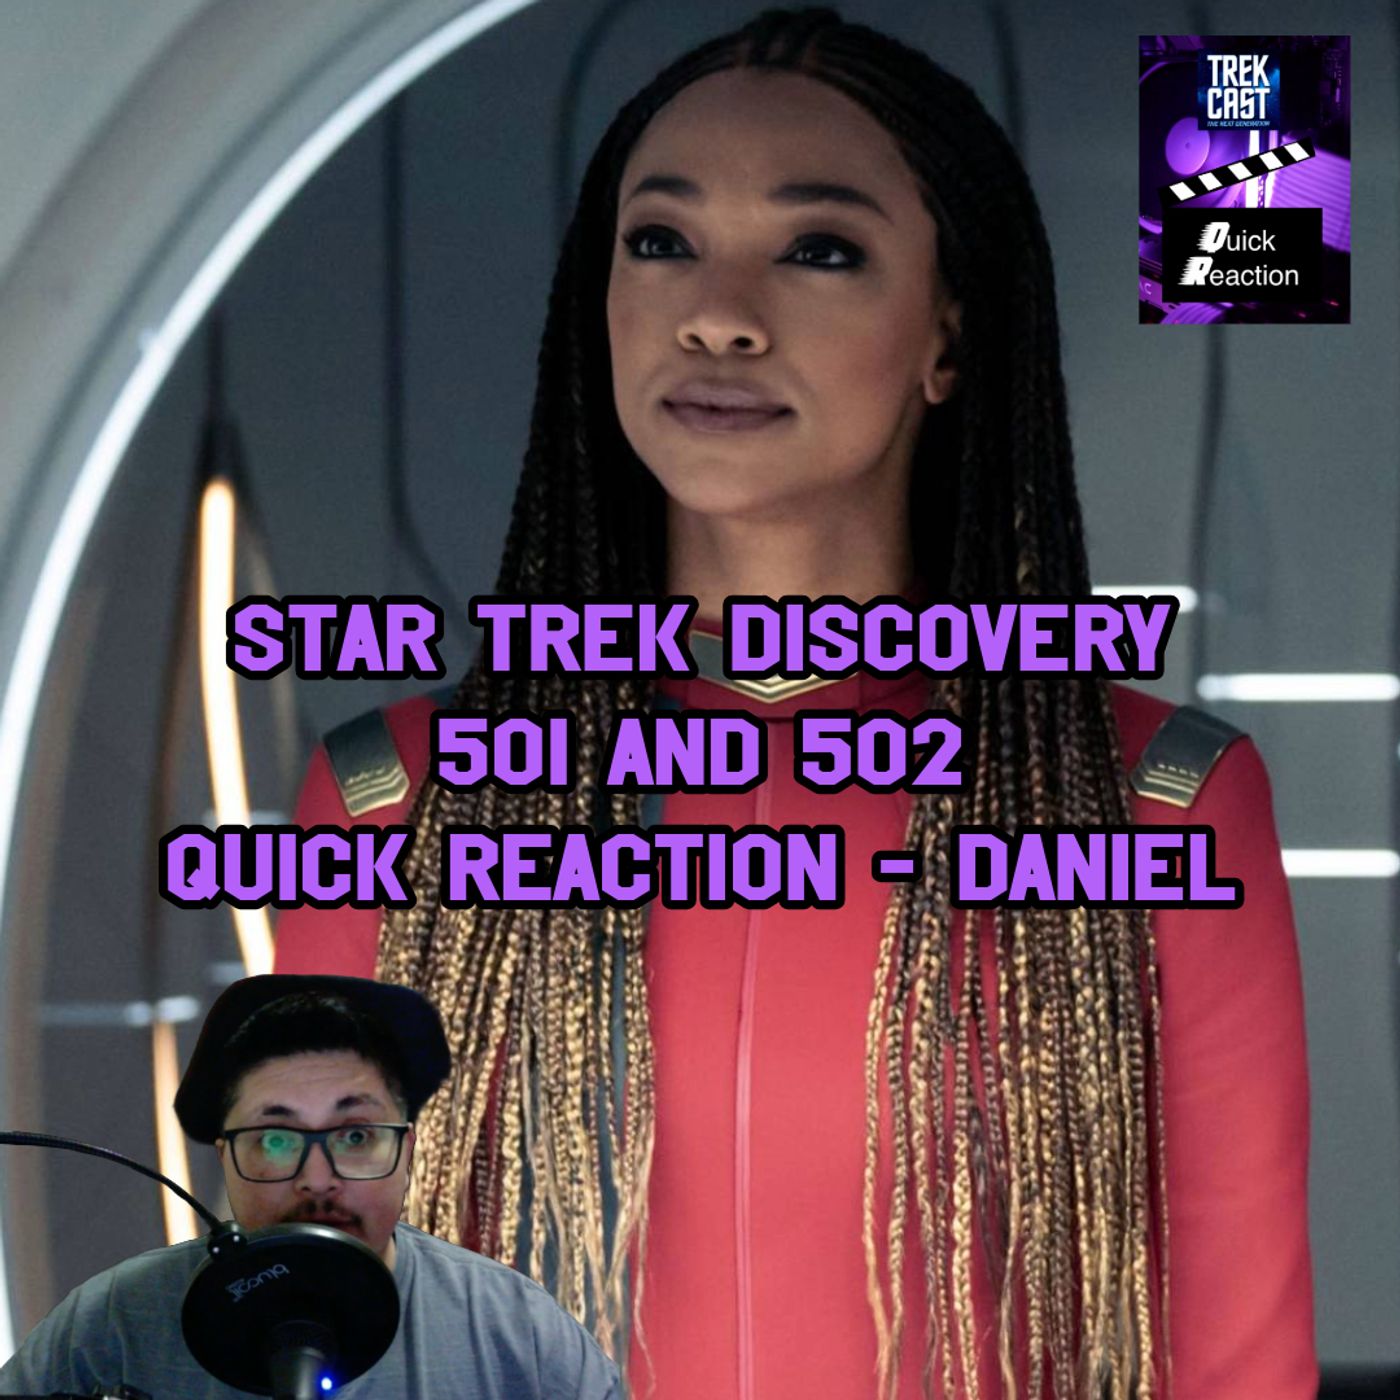 Daniel’s Star Trek Discovery 501 and 502 QUICK REACTION, 2 episode season premiere!